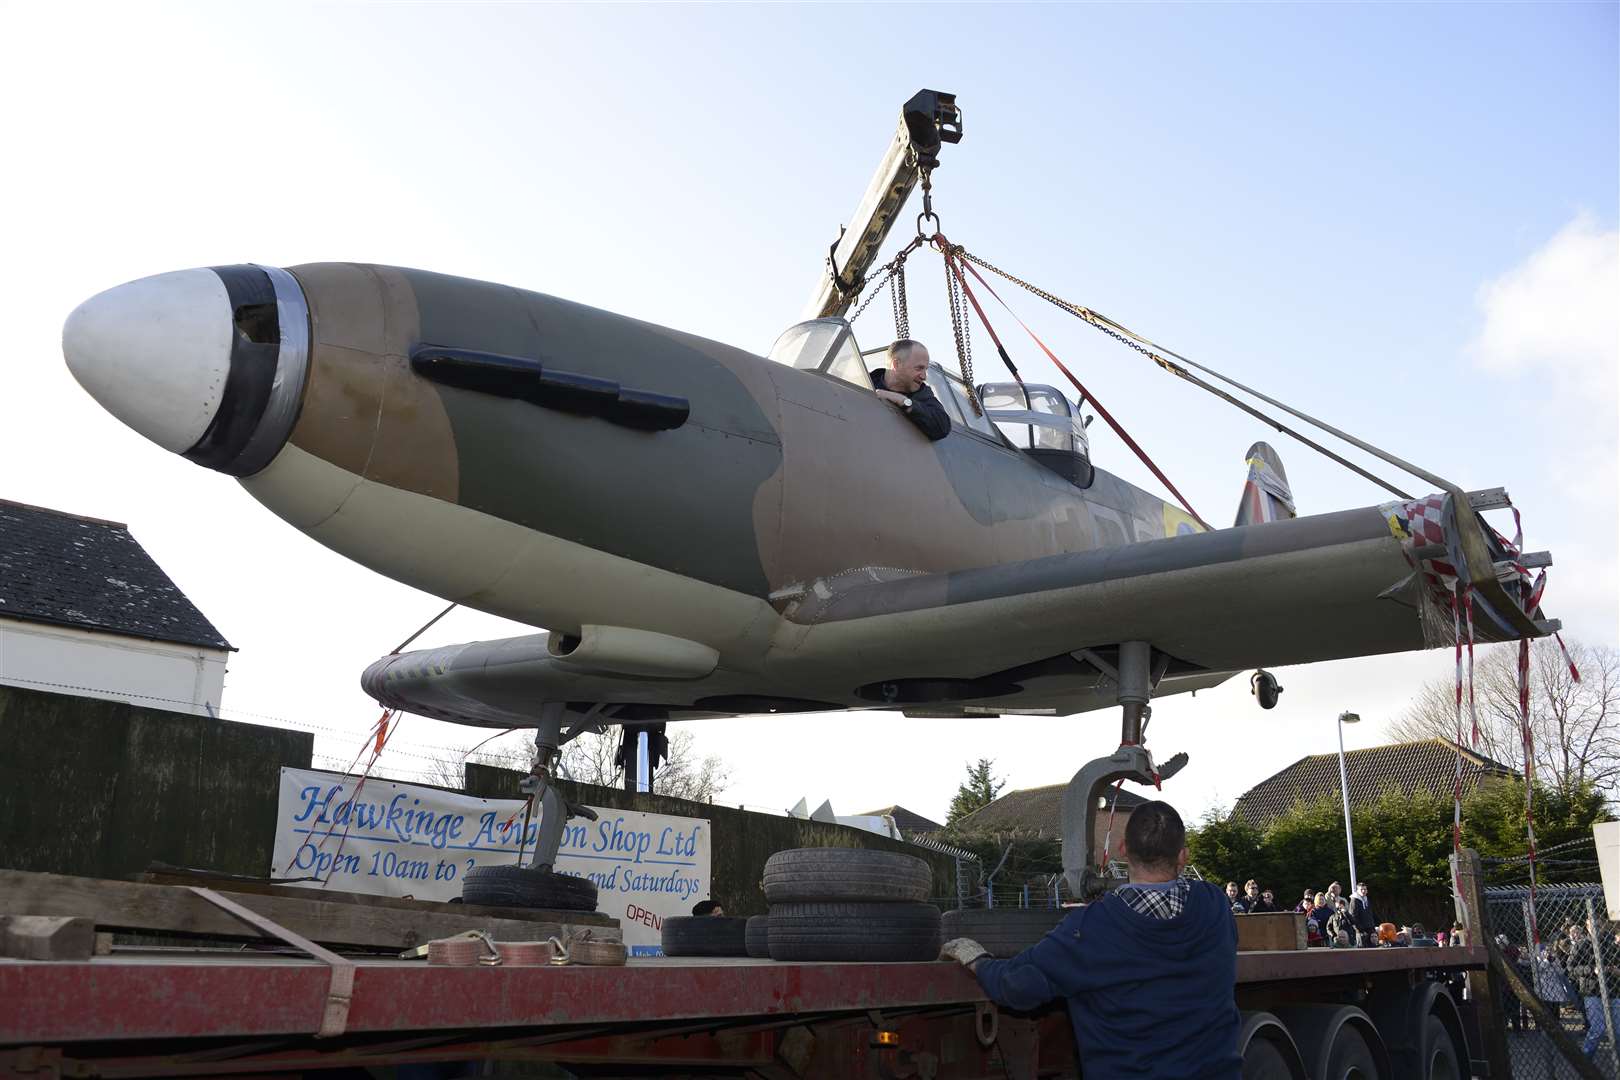 The replical Boulton Paul Defiant warplane, lowered into the Kent Battle of Britain Museum in Hawkinge.